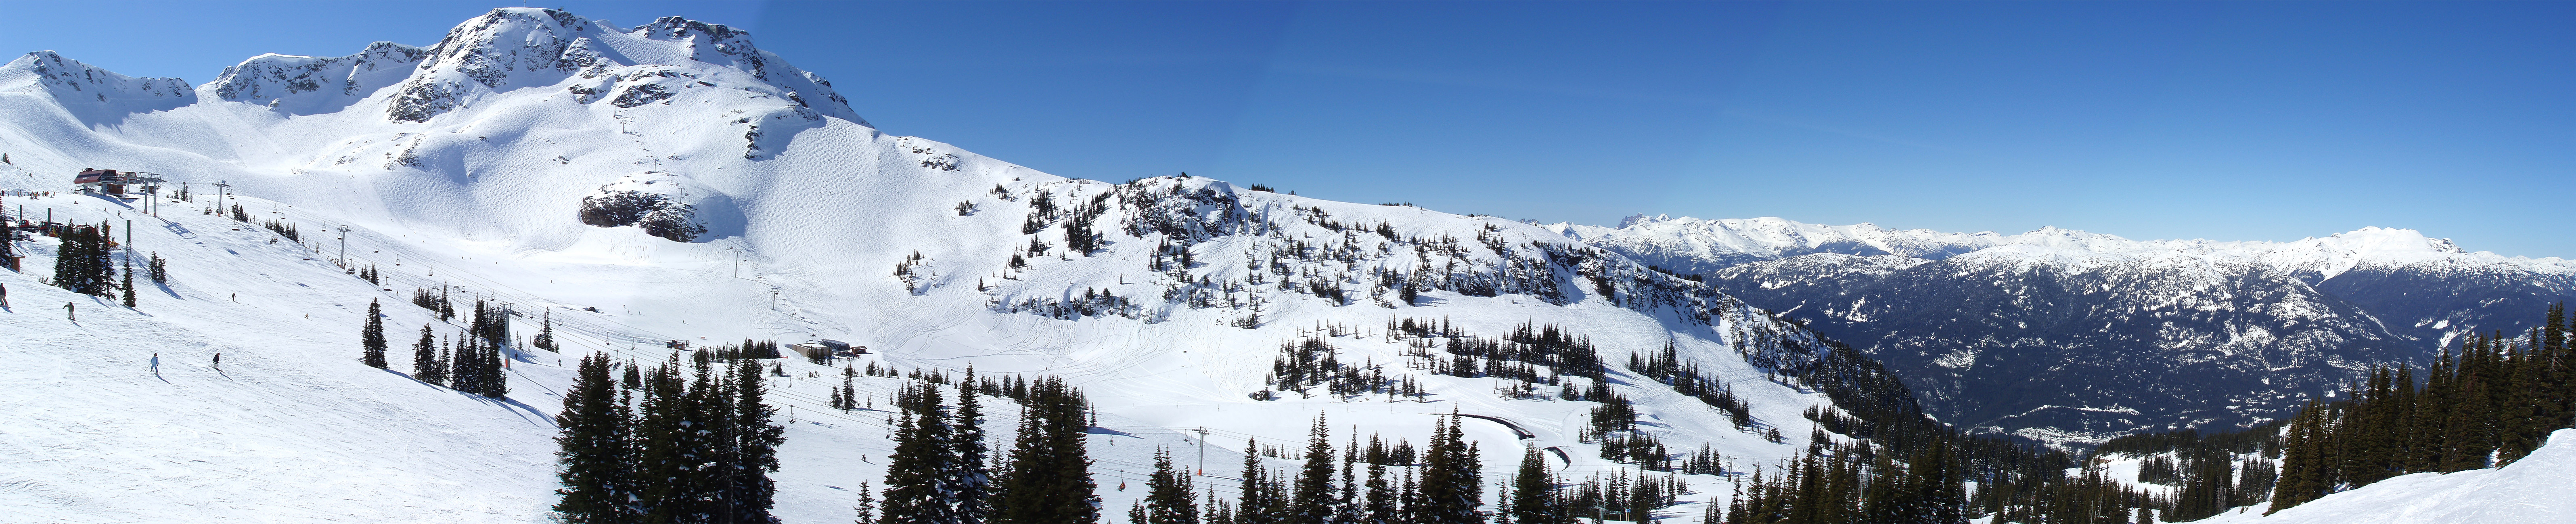 Whistler ski resort image wikimedia